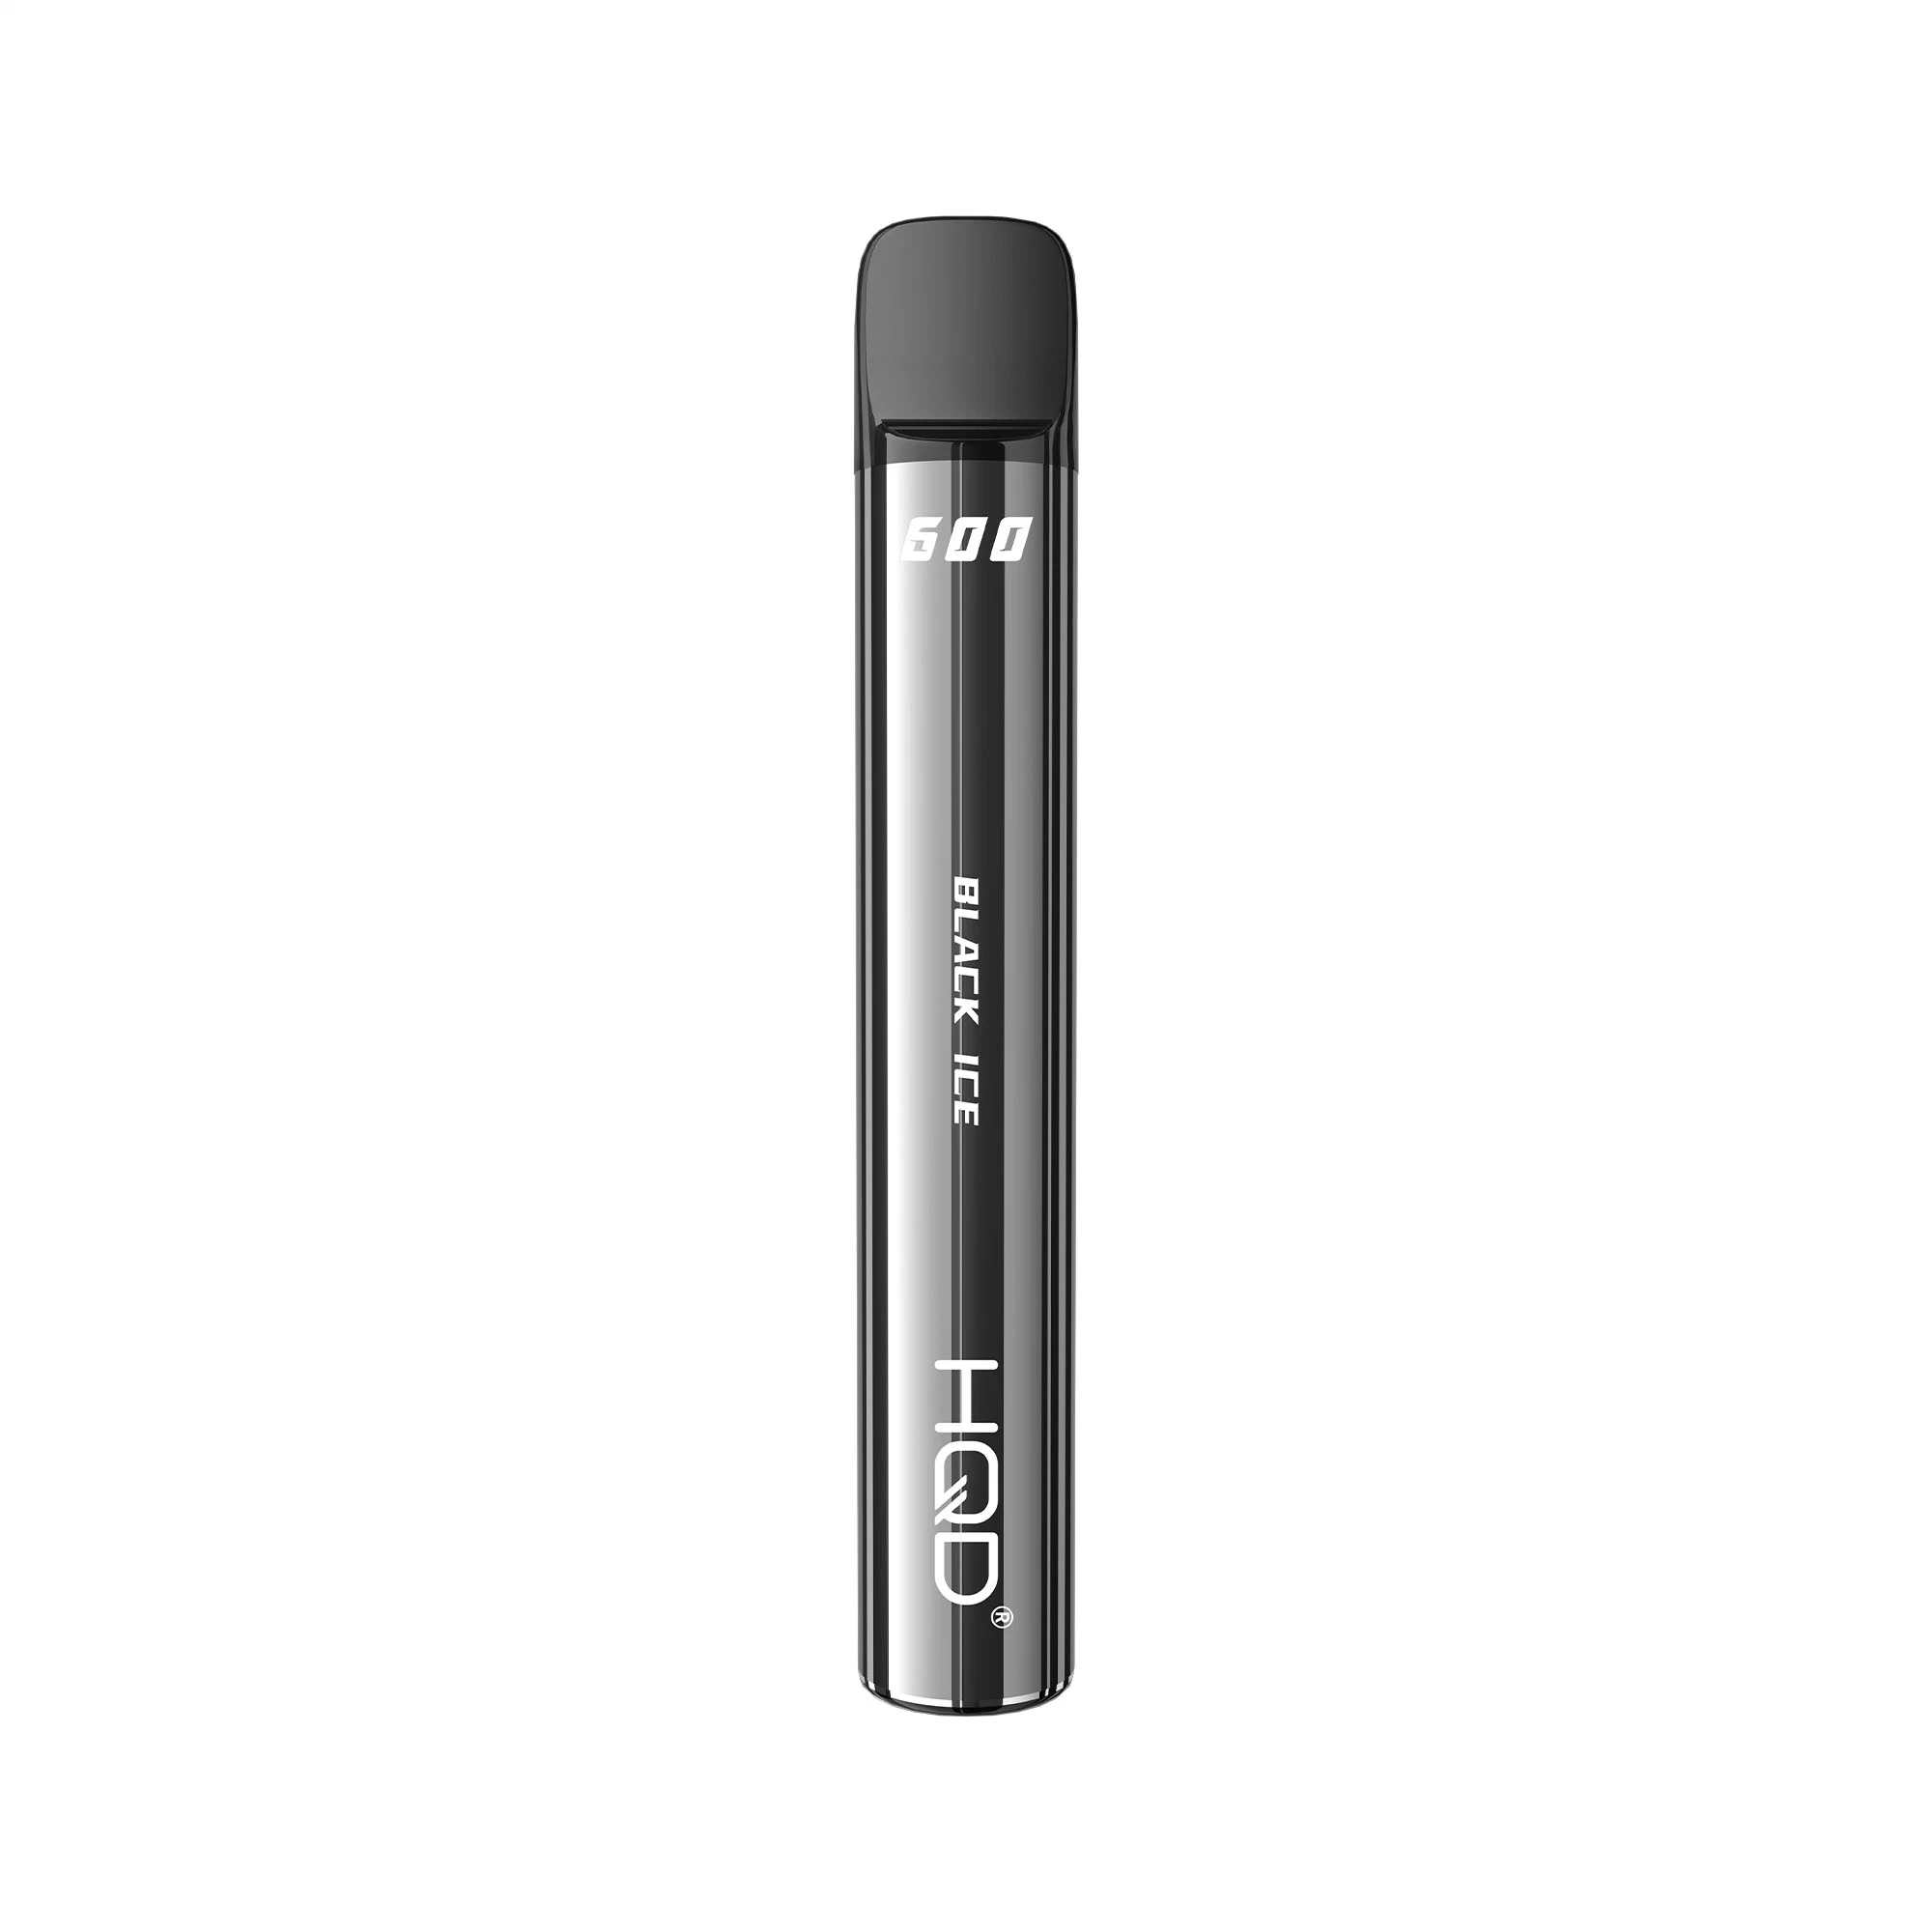 Hqd Super Bar 600 Puffs 500 mAh Best Quality vape Disposable/Chargeable Vape Pen